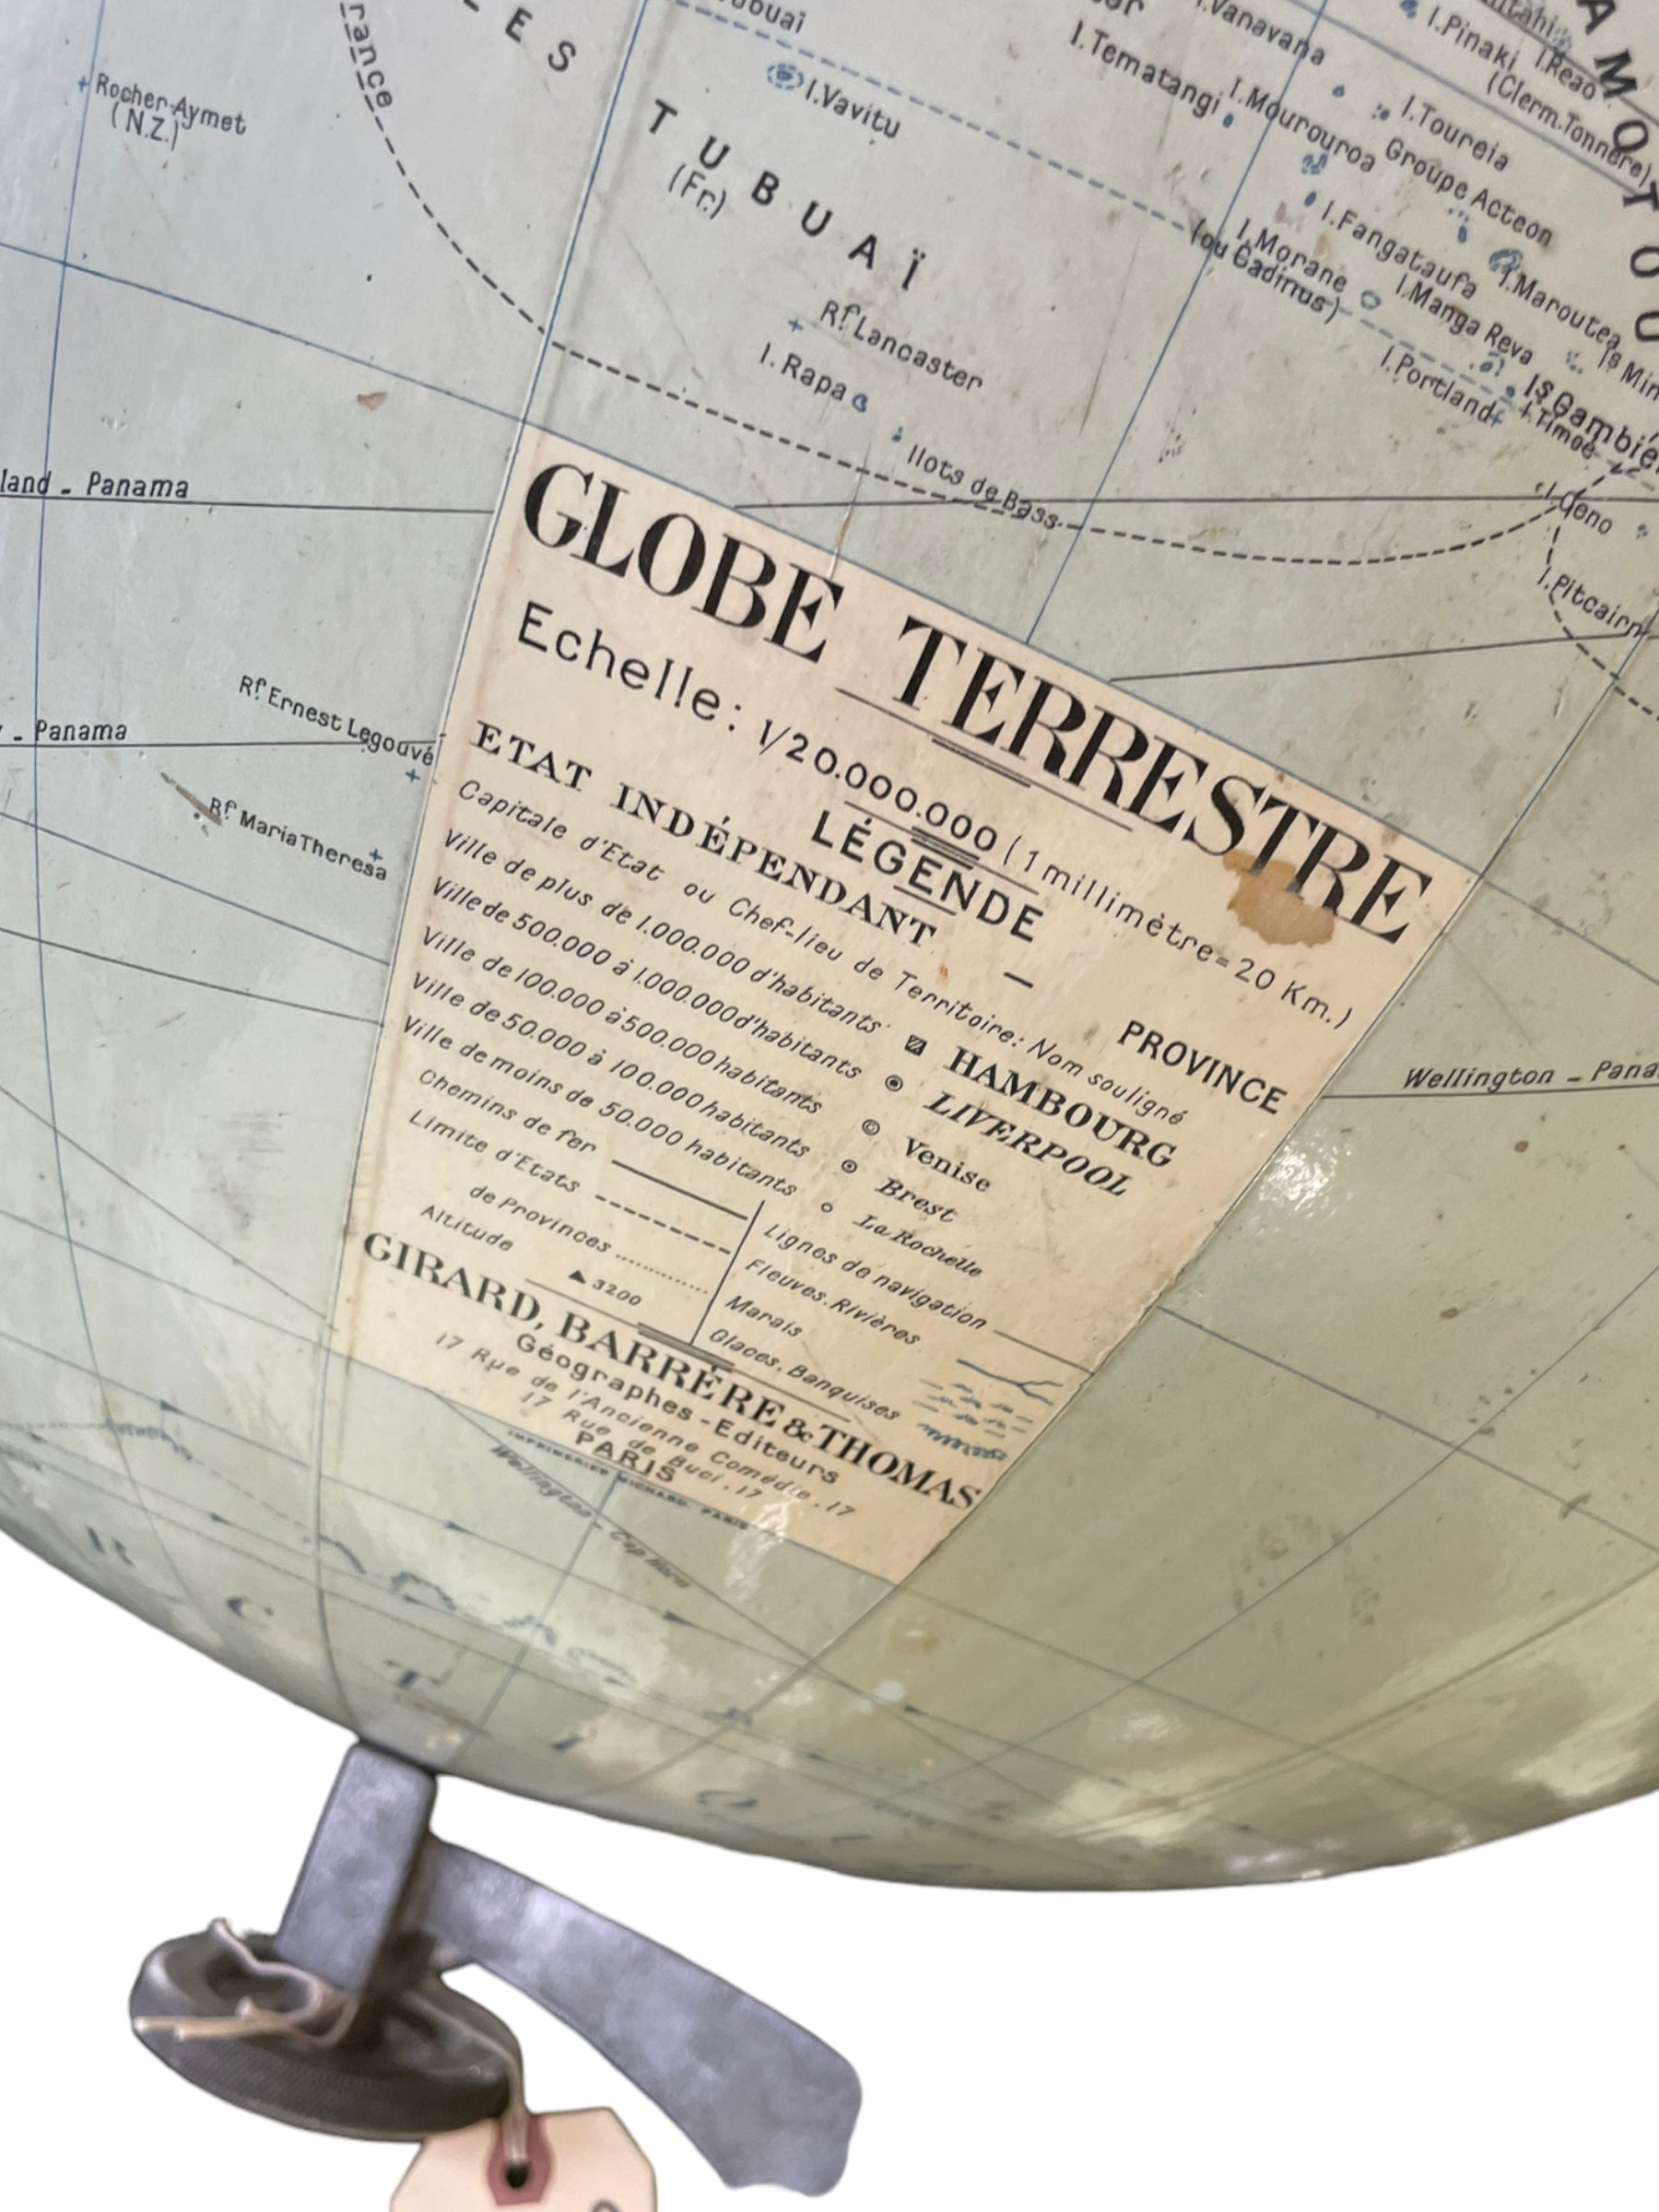 Grand globe terrestre Girard Barrere et Thomas de Paris, en France